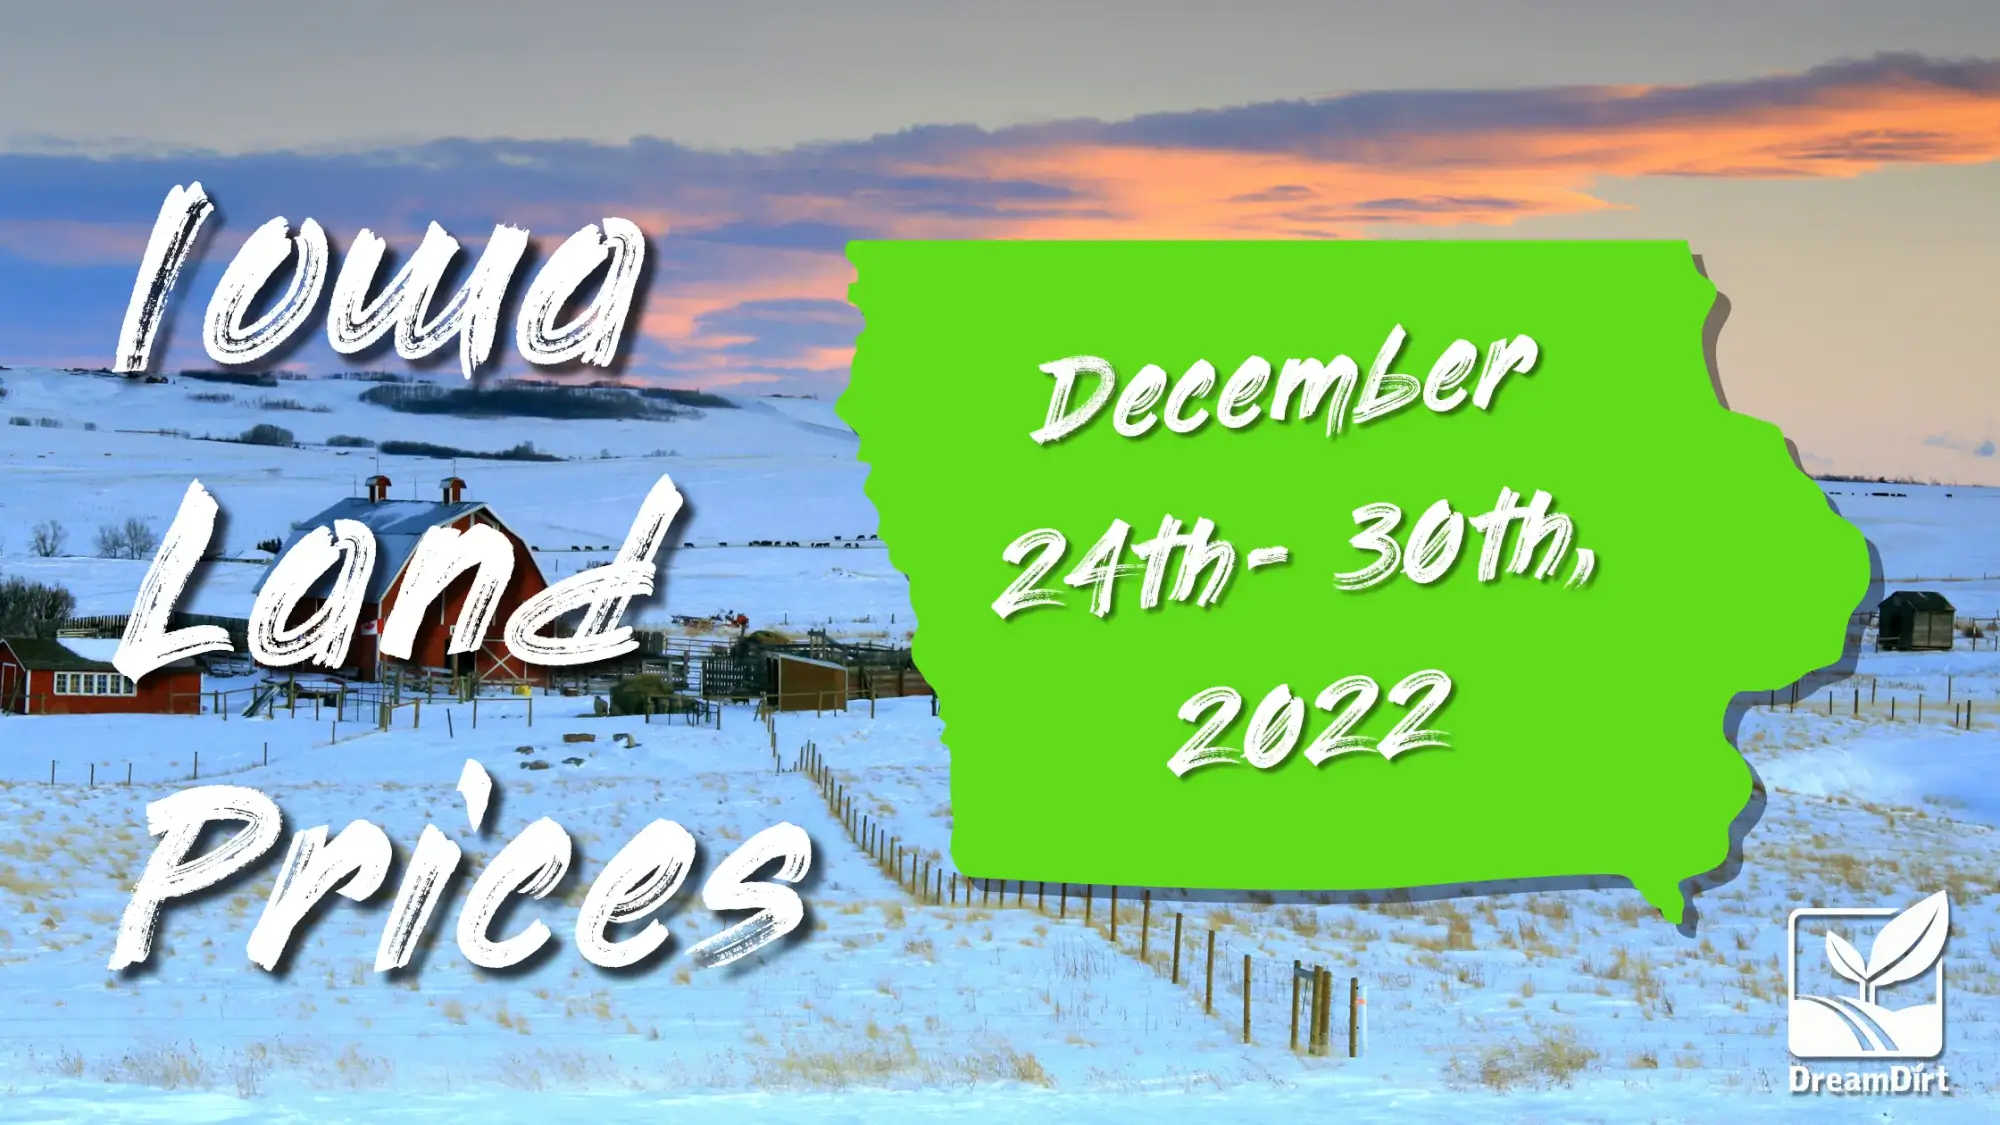 December 24th-30th Iowa land prices sales